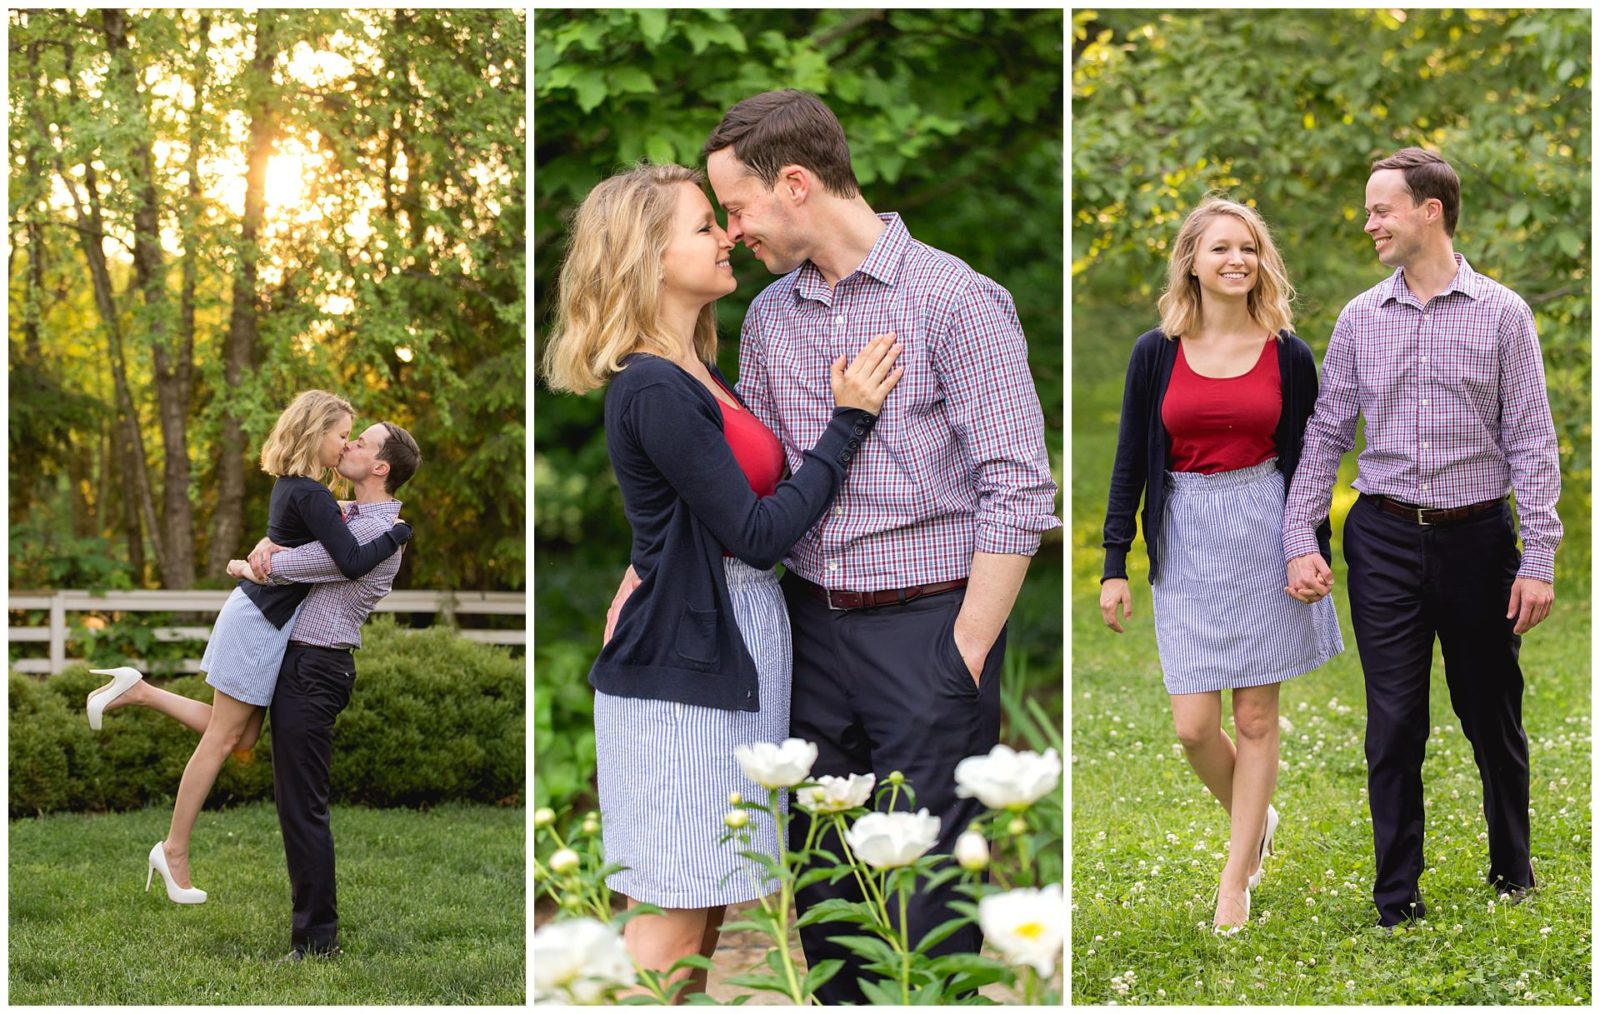 Engagement photos at the University of Kentucky Arboretum in Lexington, KY